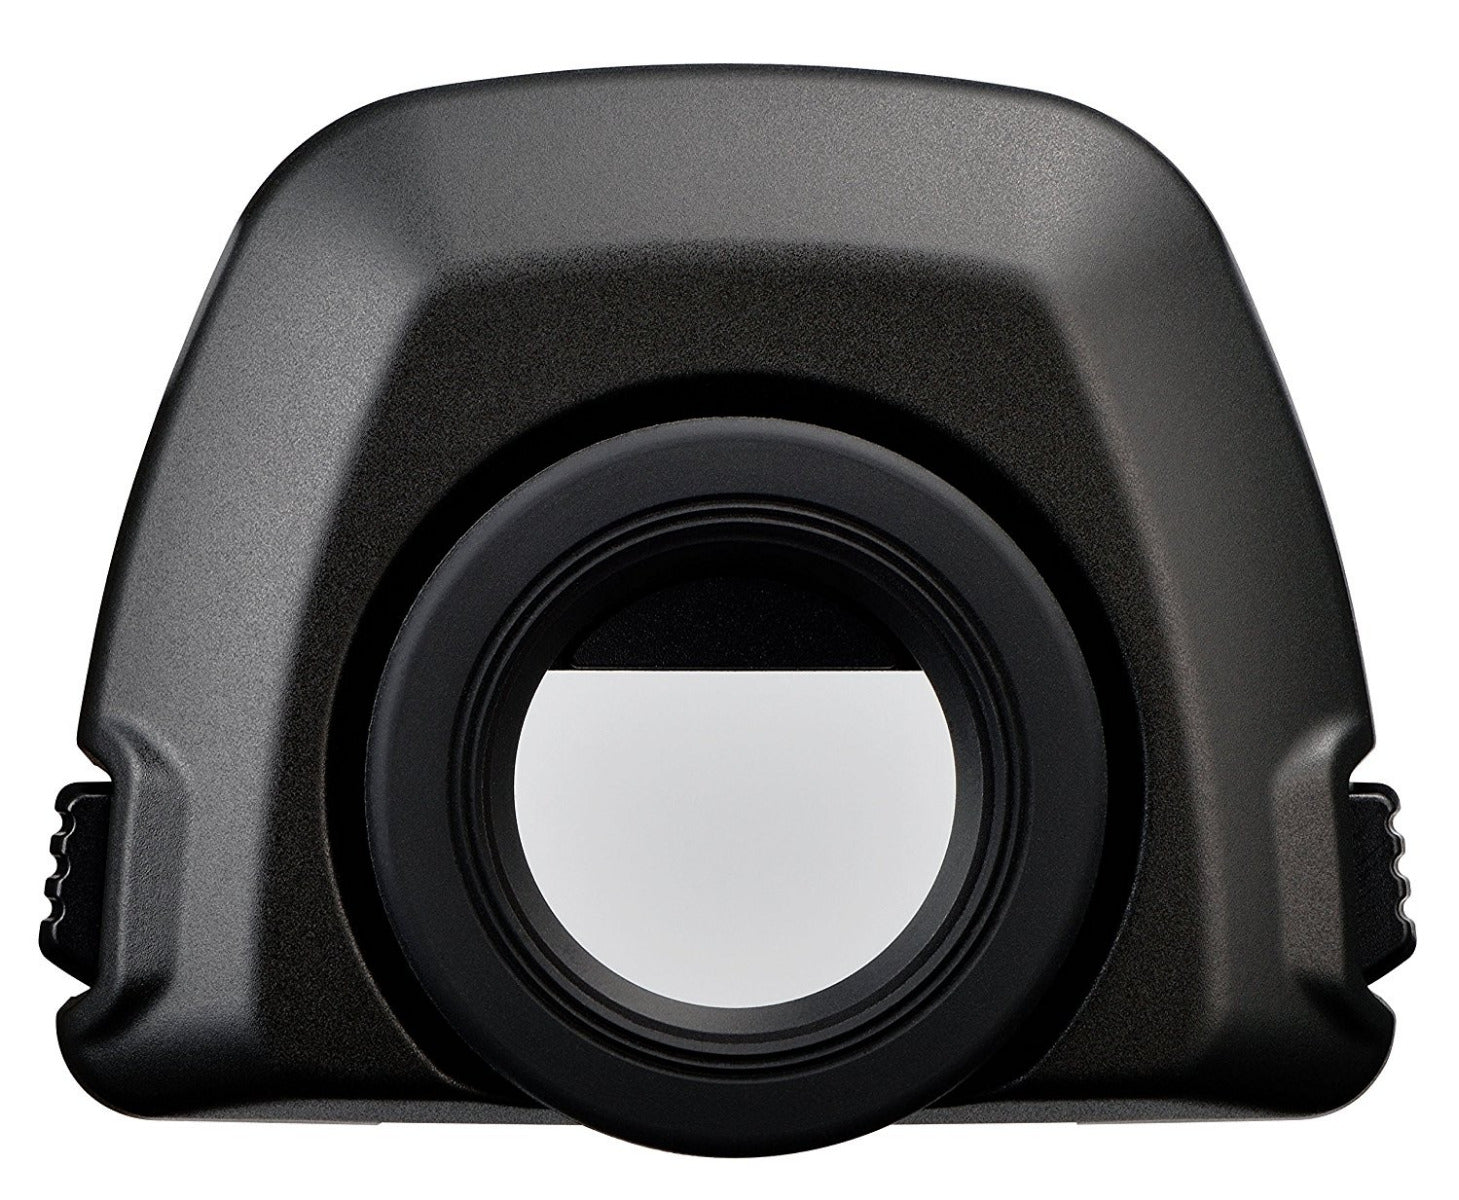 Product Image of Nikon DK-27 Eyepiece Adapter for Nikon D5